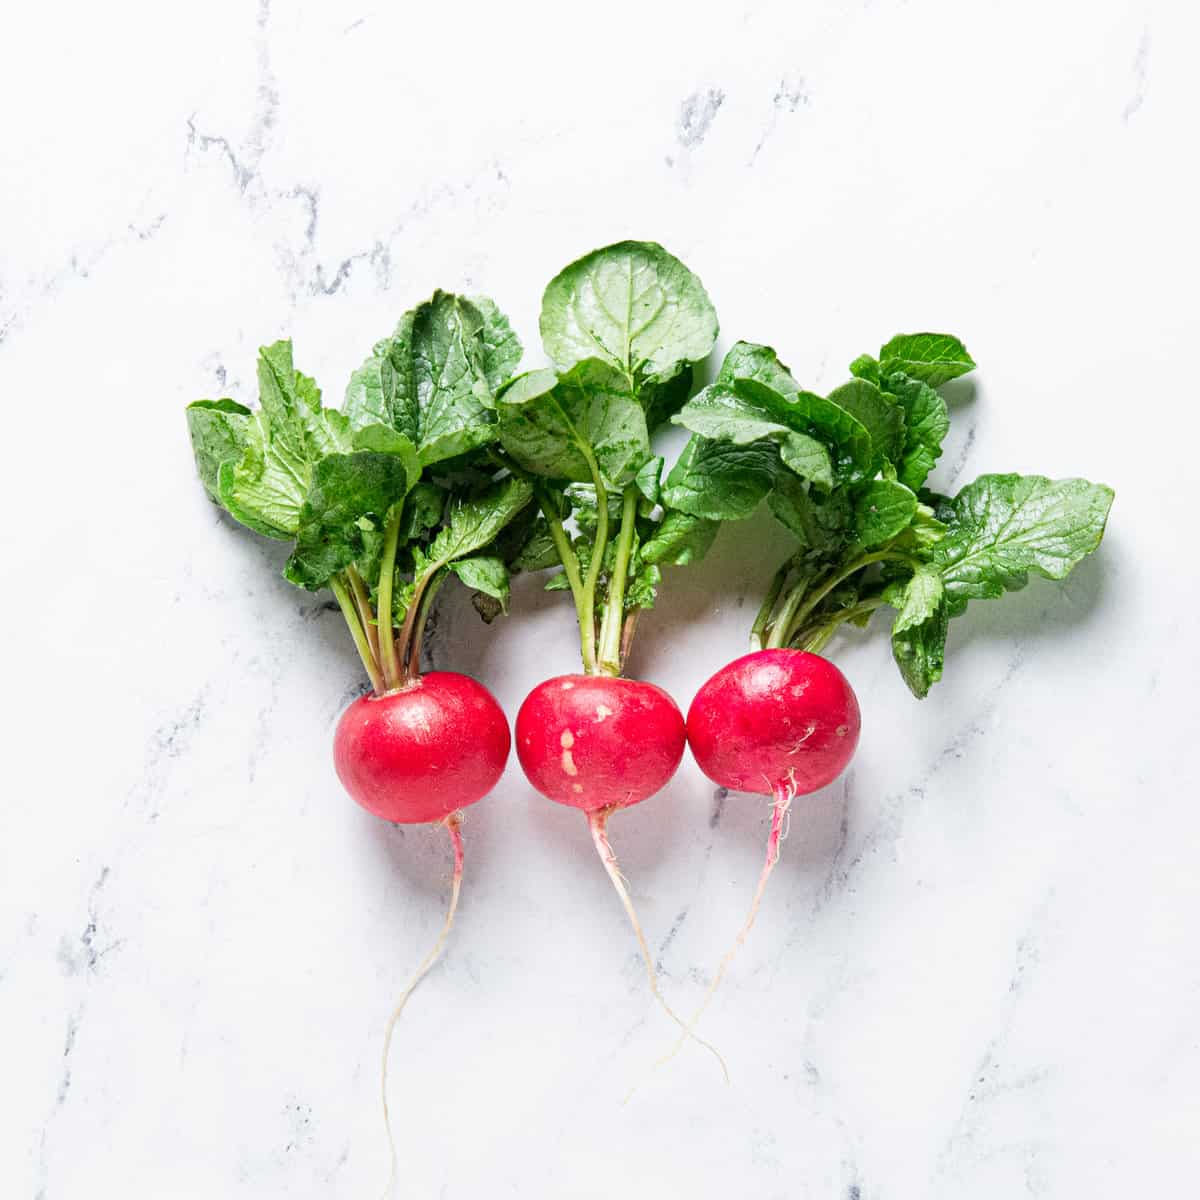 Three radishes on a kitchen counter.